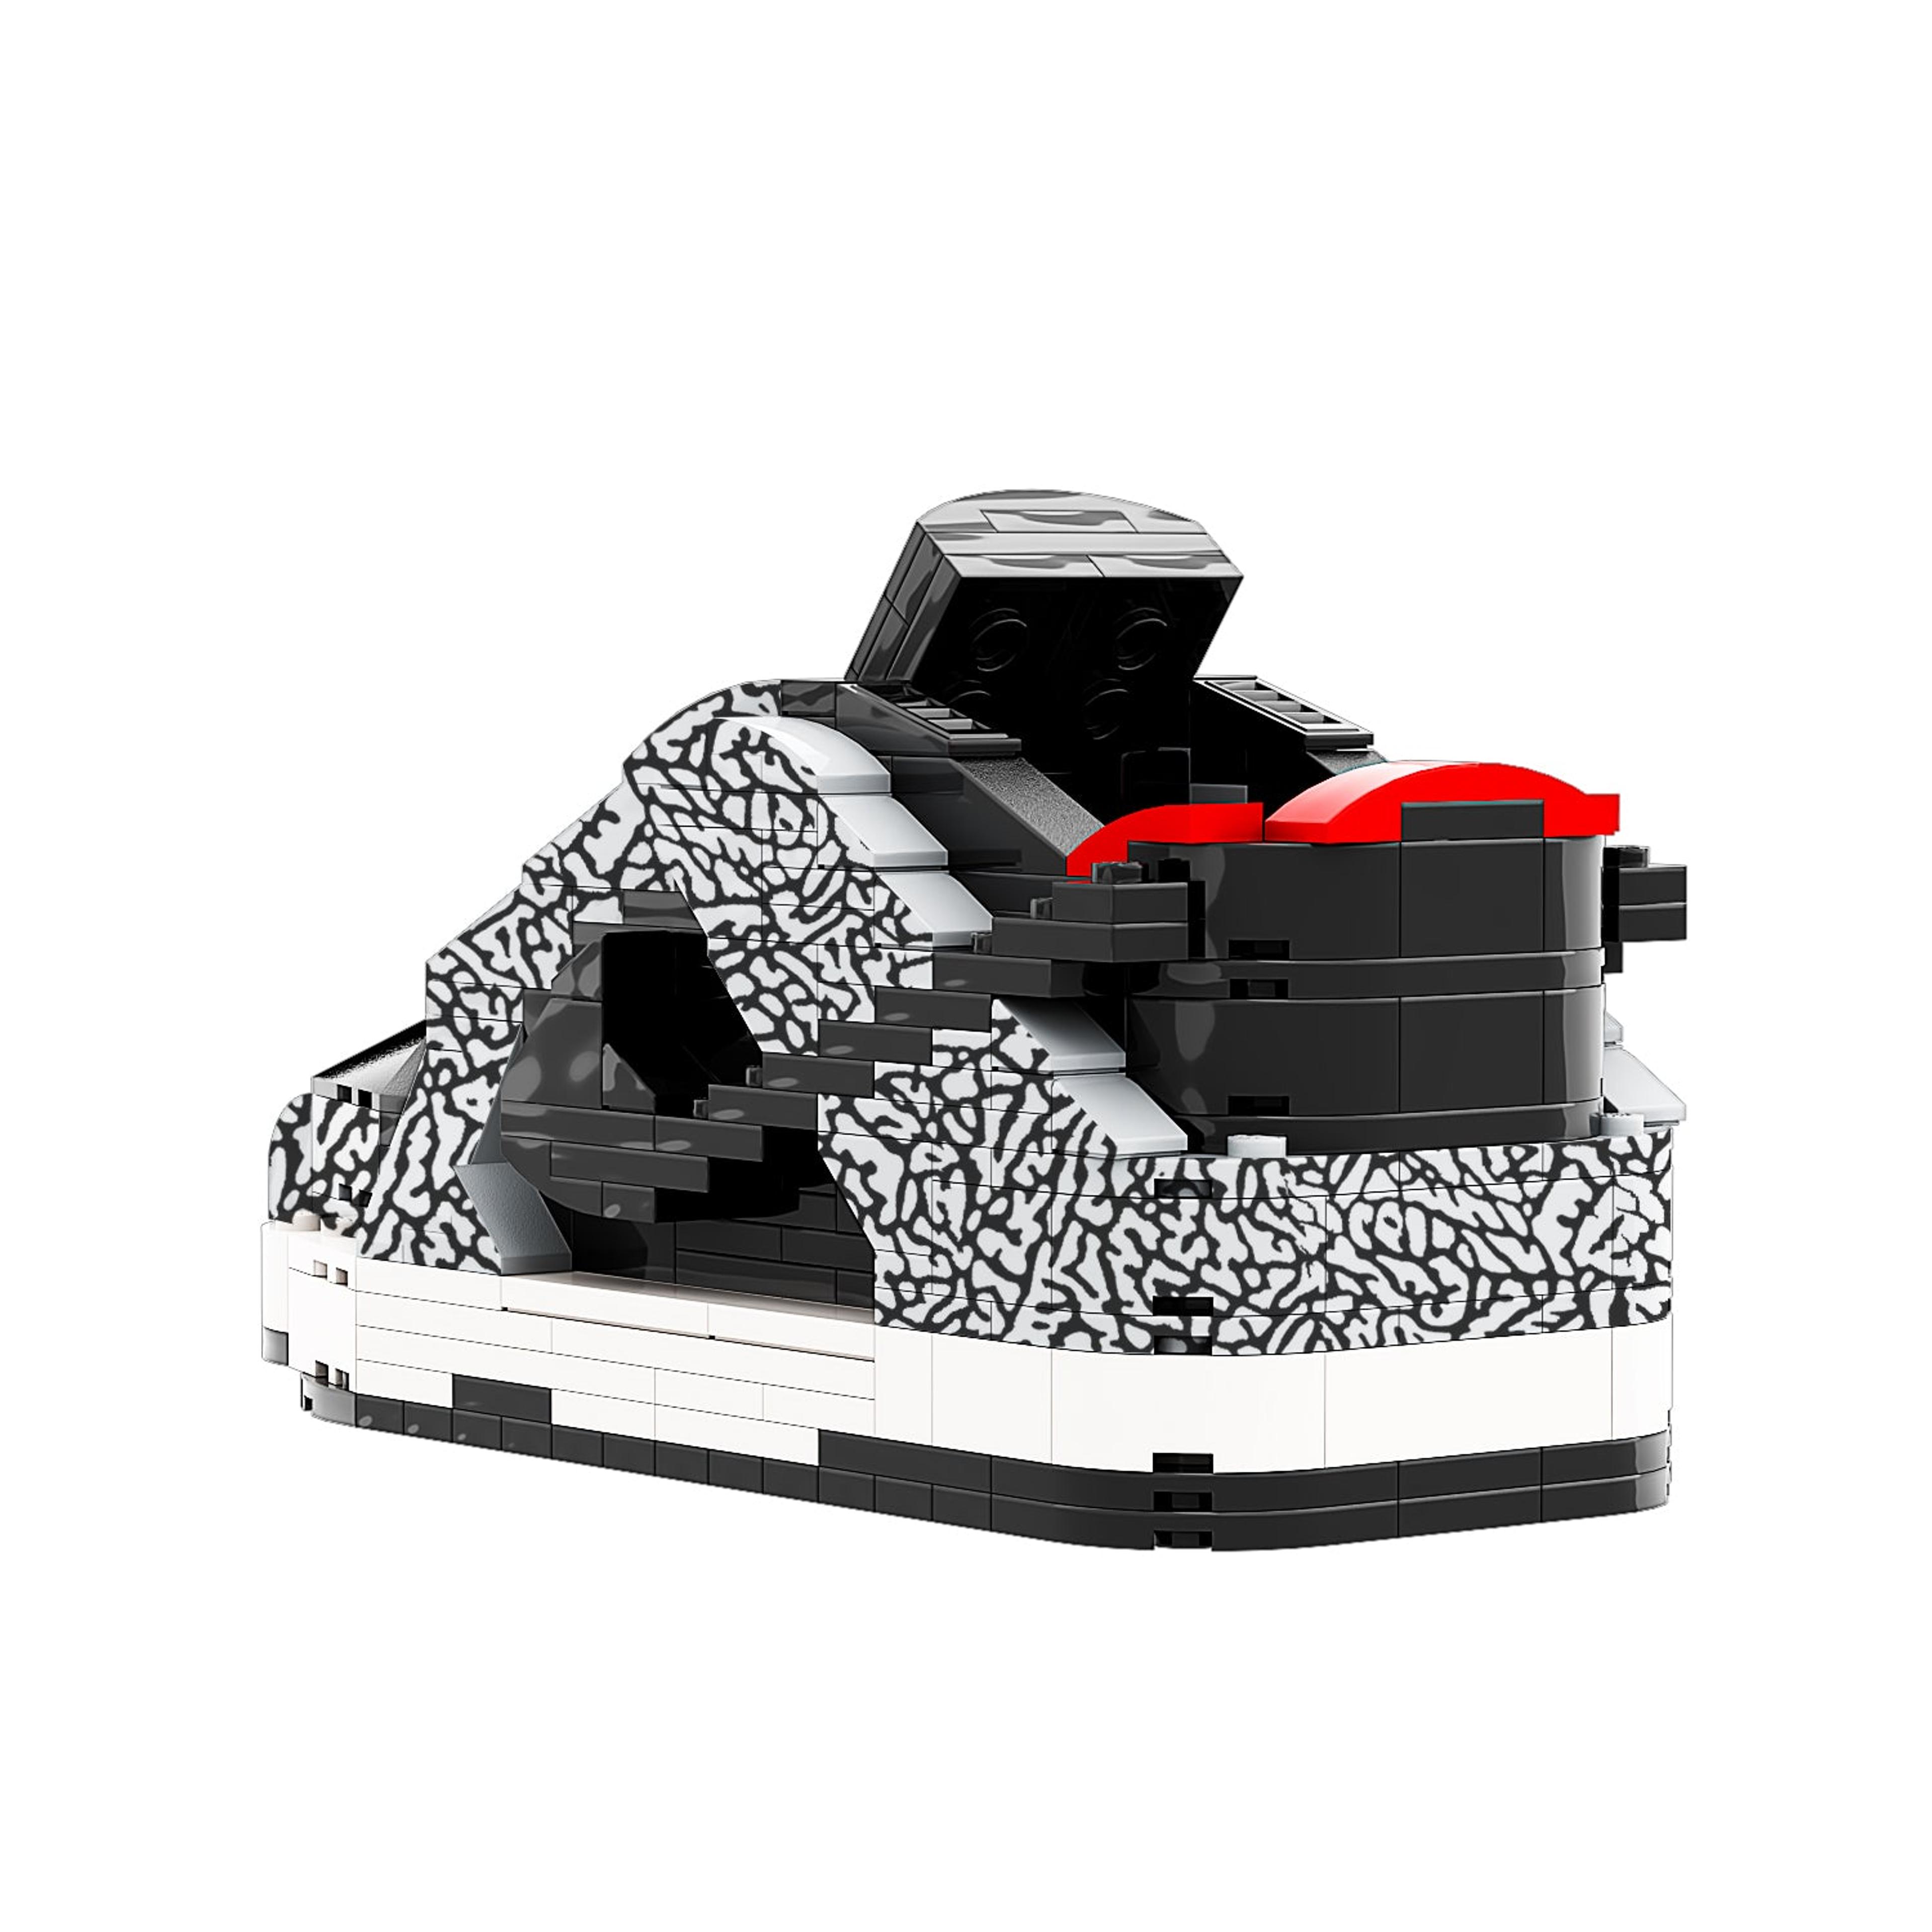 Alternate View 3 of REGULAR SB Dunk SUP "Black Cement" Sneaker Bricks with Mini Figu